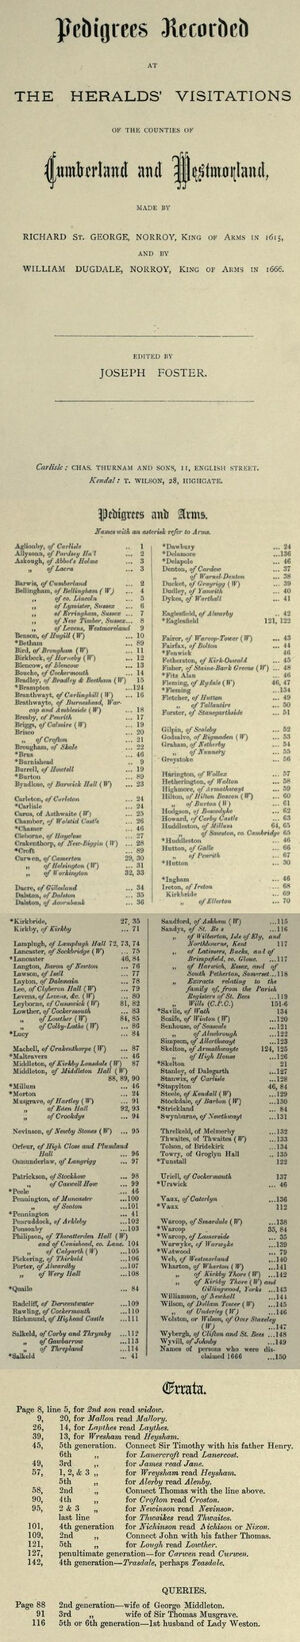 Index, (Vis. of Cumbs & Westm, 1615 & 66)